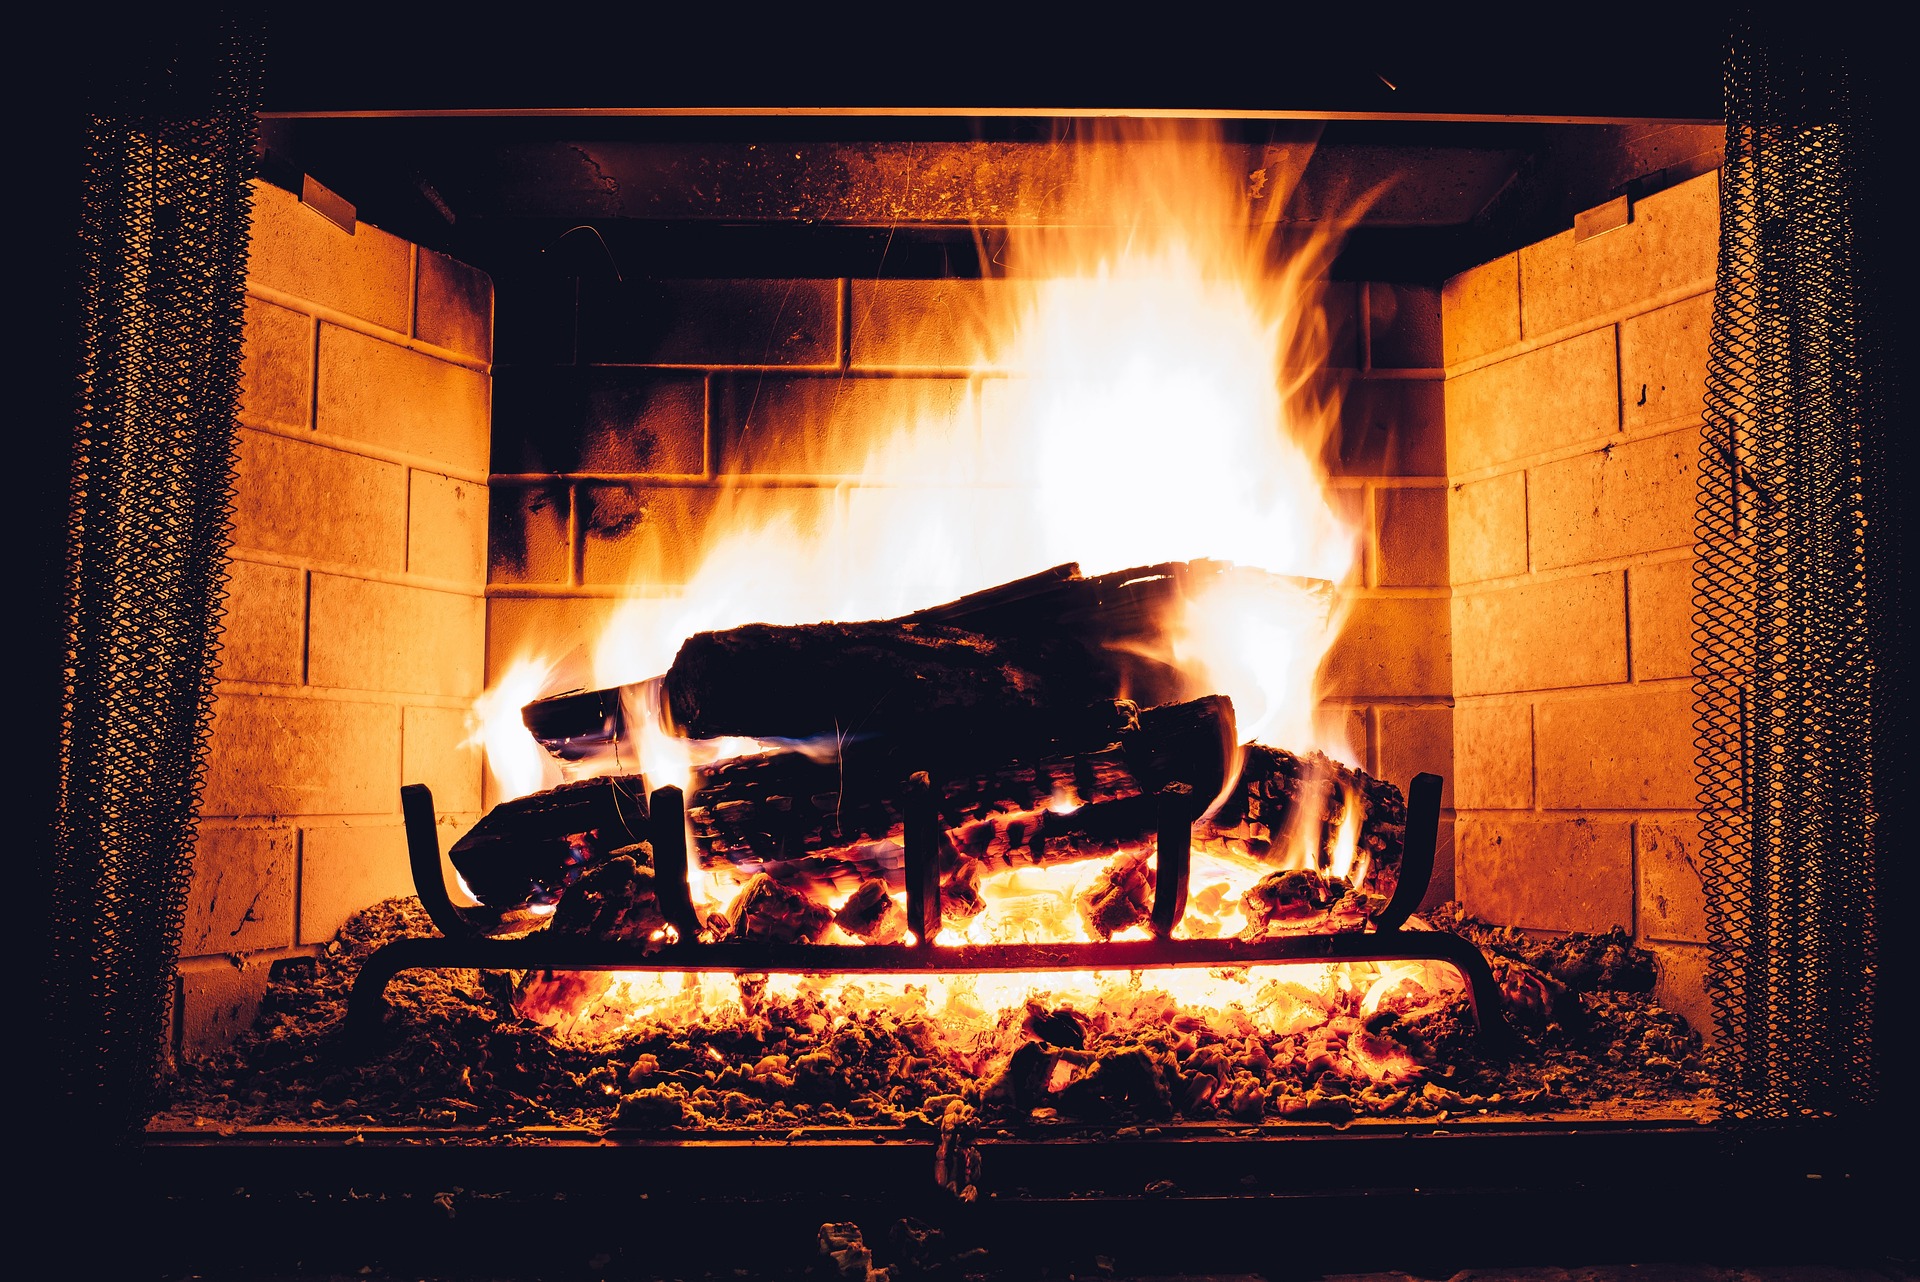 A blazing fireplace.